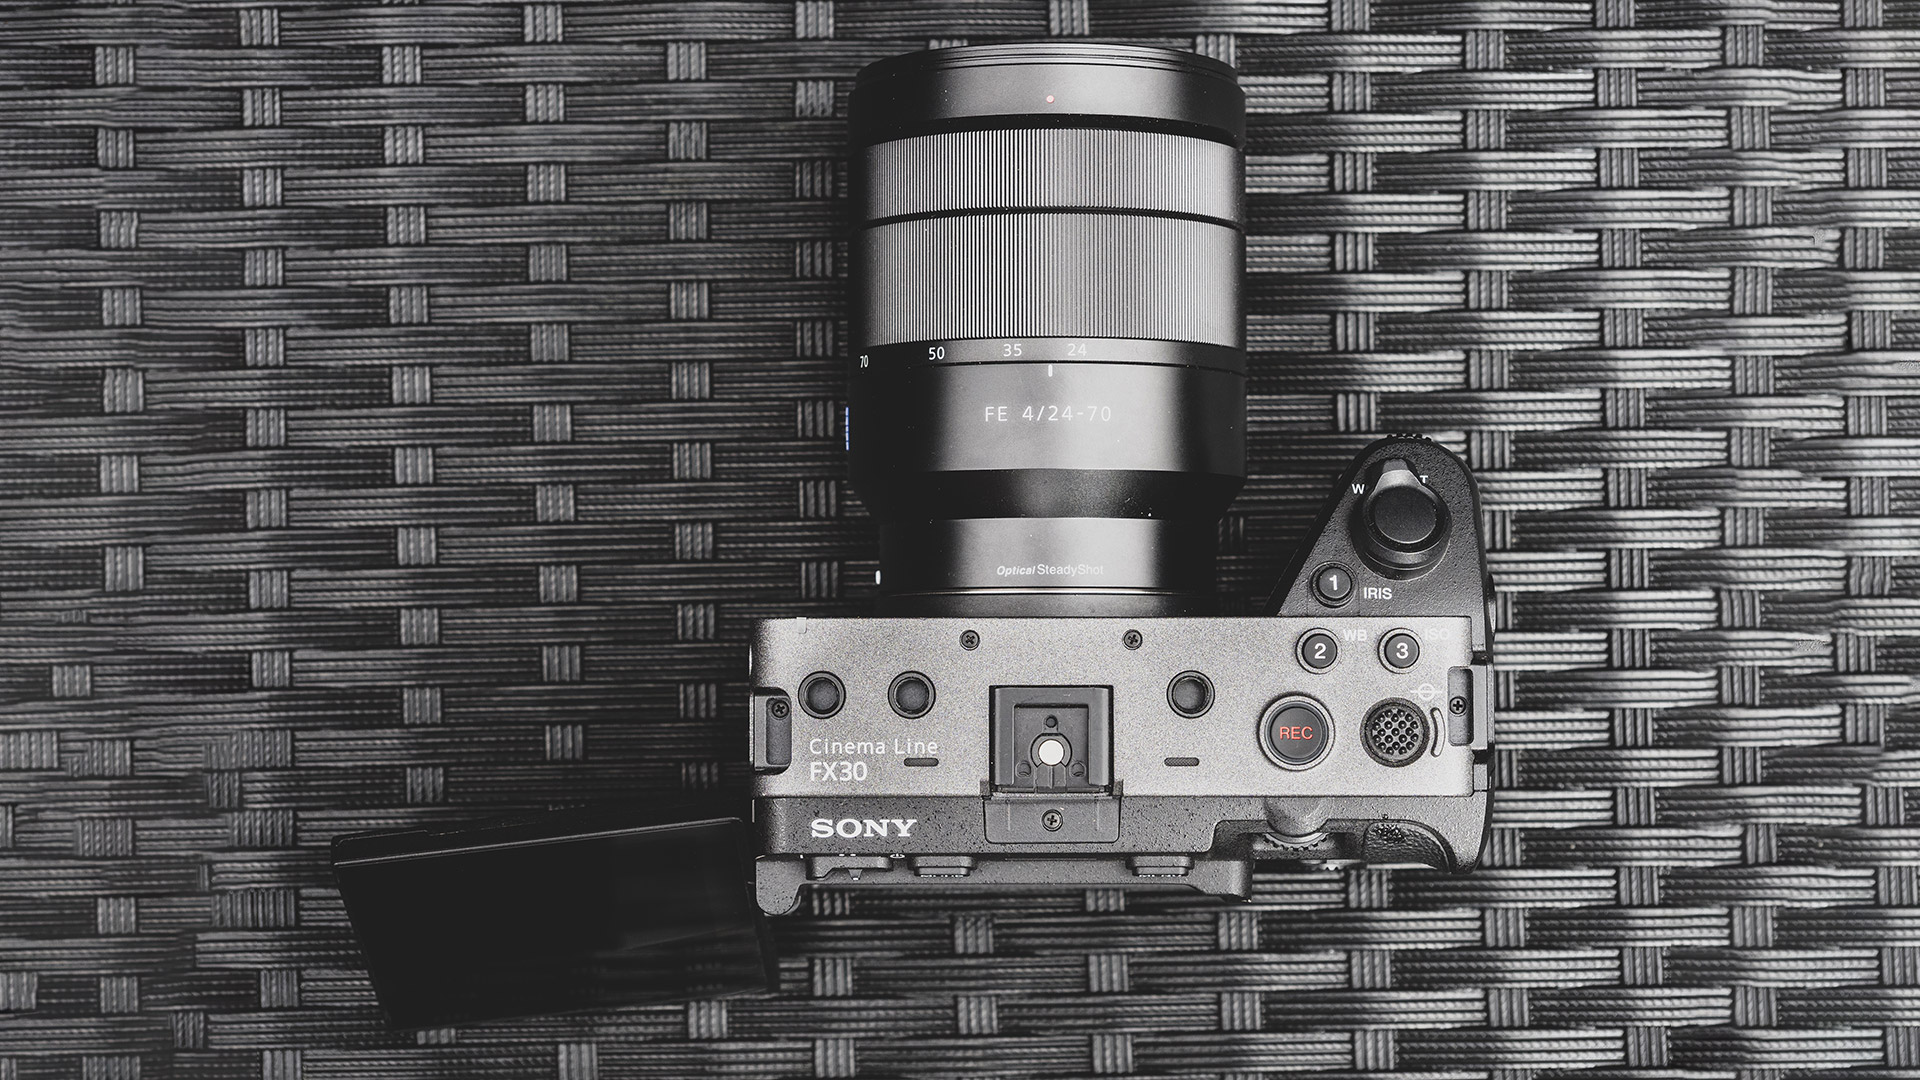 Sony FX30 Cinema Line camera from above